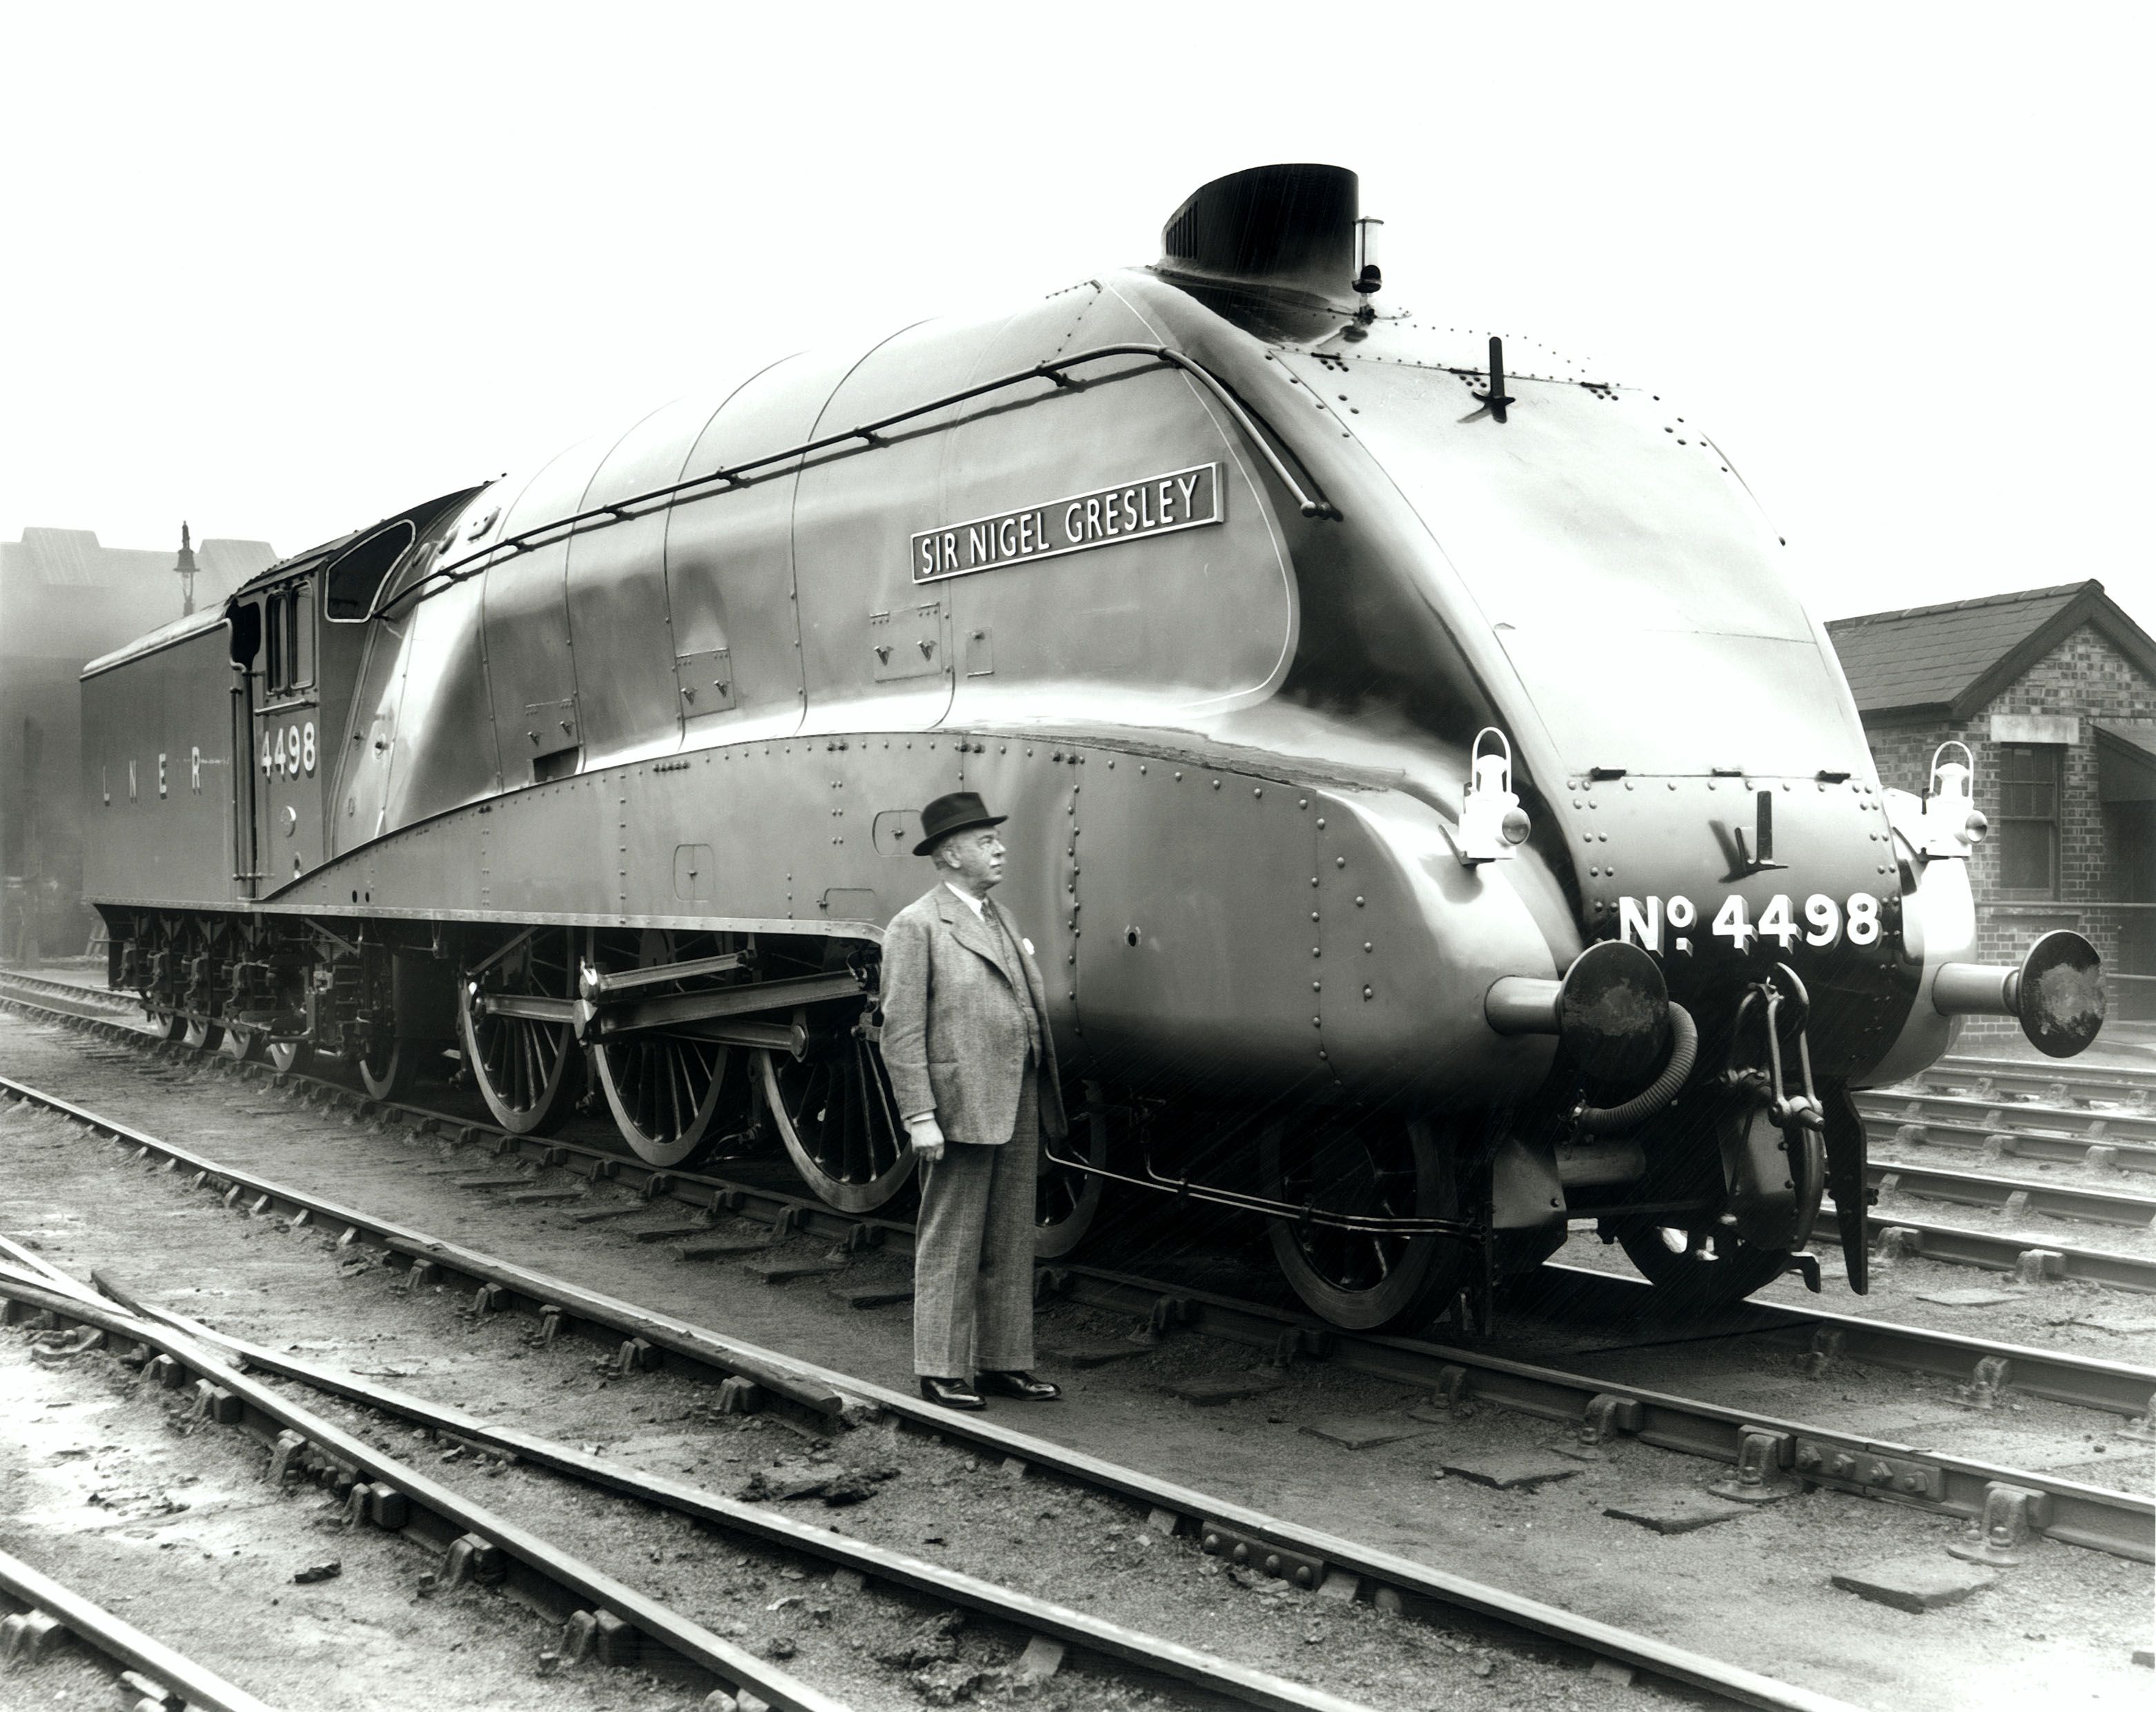 sir h nigel gresley, railway engineer, march 1938